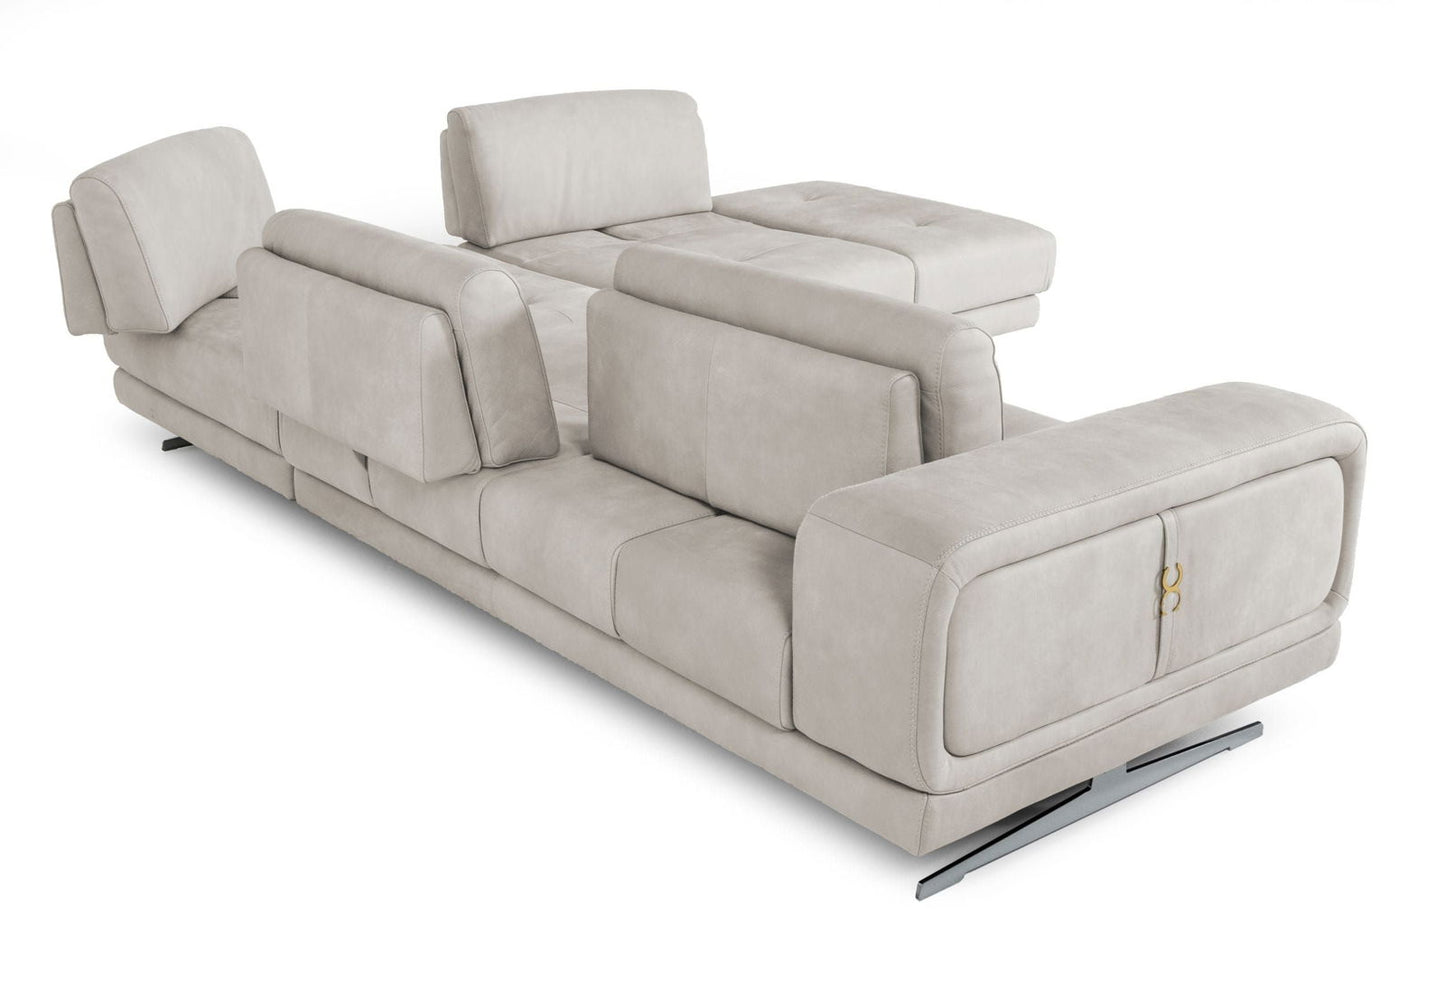 Coronelli Collezioni Mood - Contemporary Light Grey Leather Right Facing Sectional Sofa - Mac & Mabel